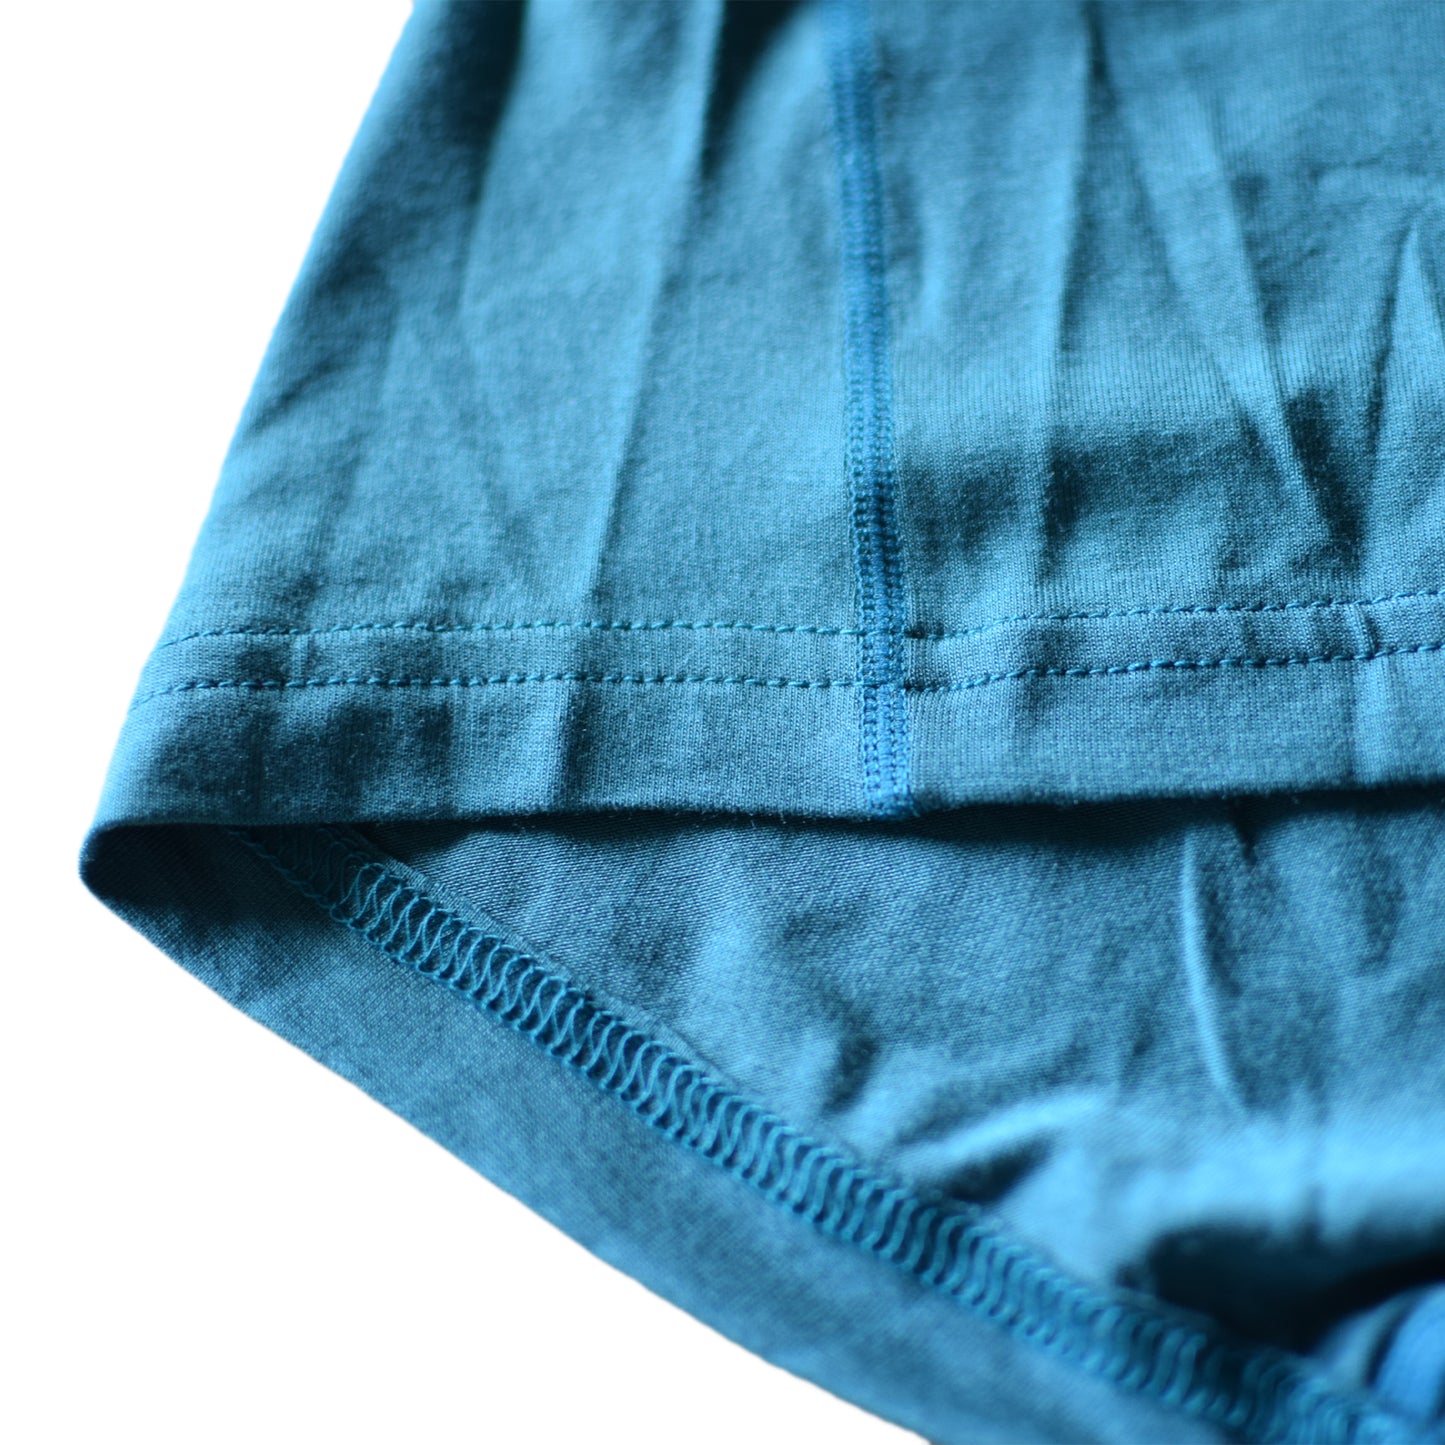 TAB UNDERWEAR - Knit Trunks Soft/Eco Package